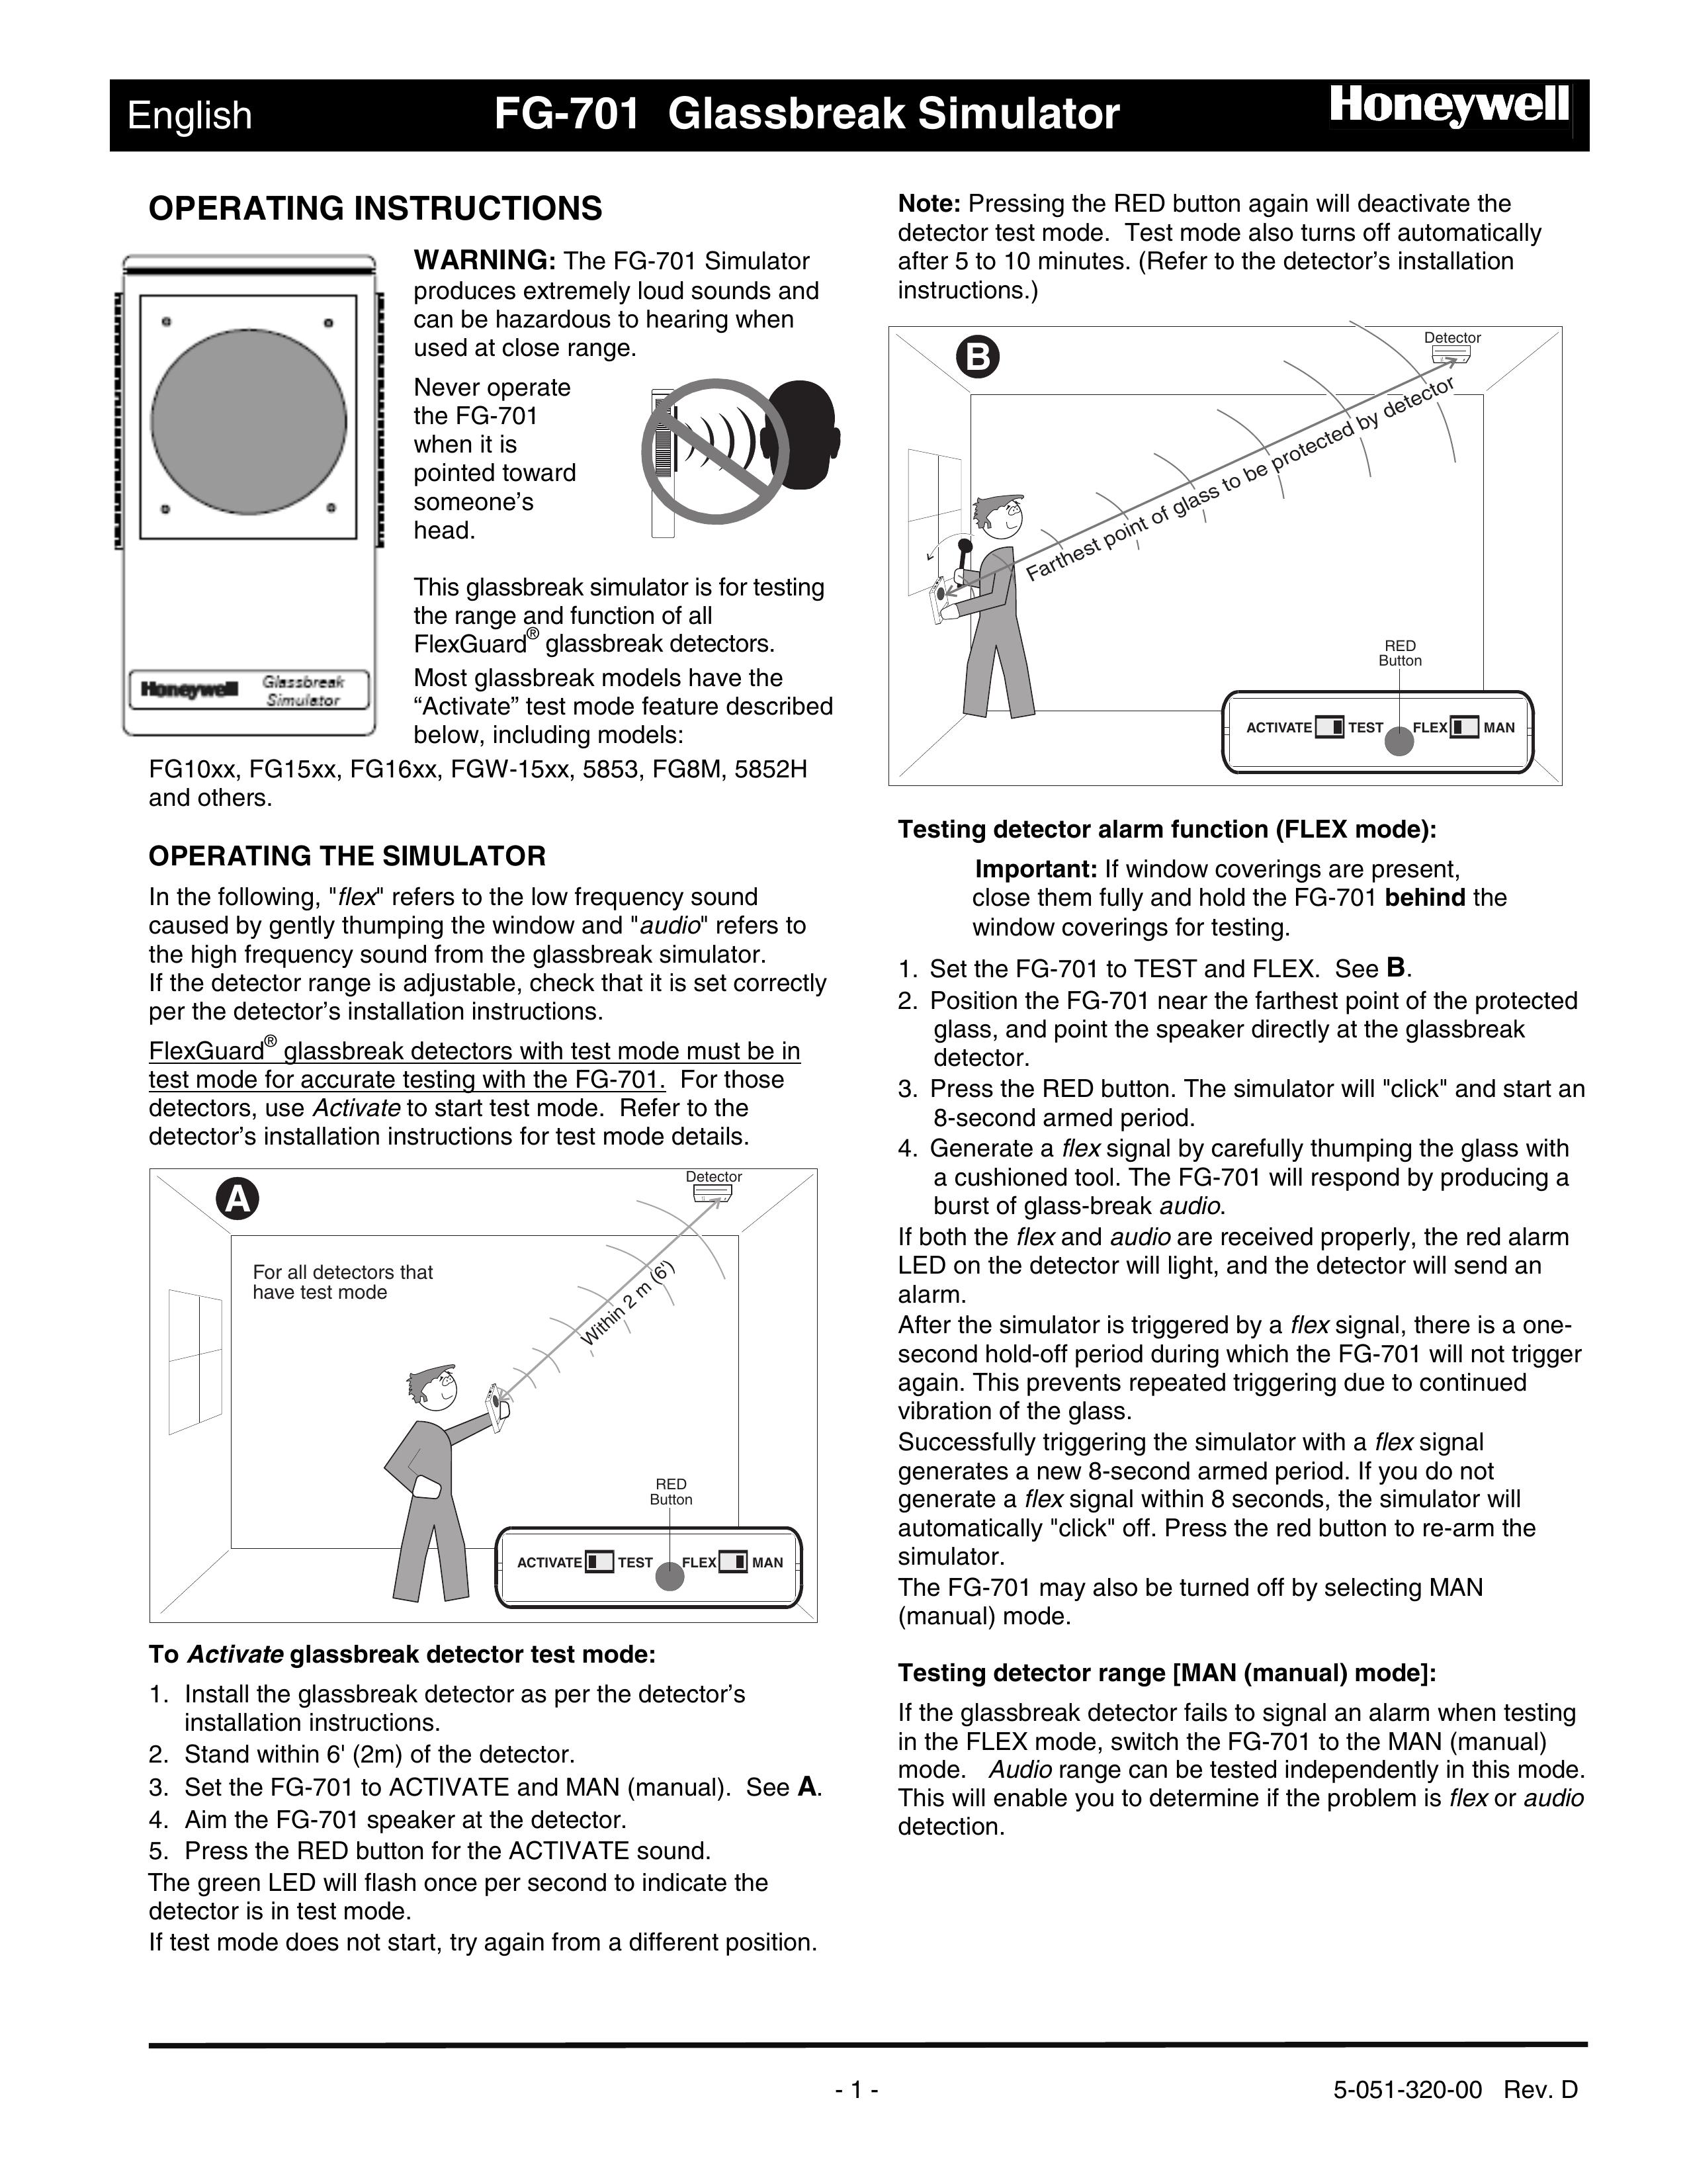 Honeywell FG-701 Refrigerator User Manual